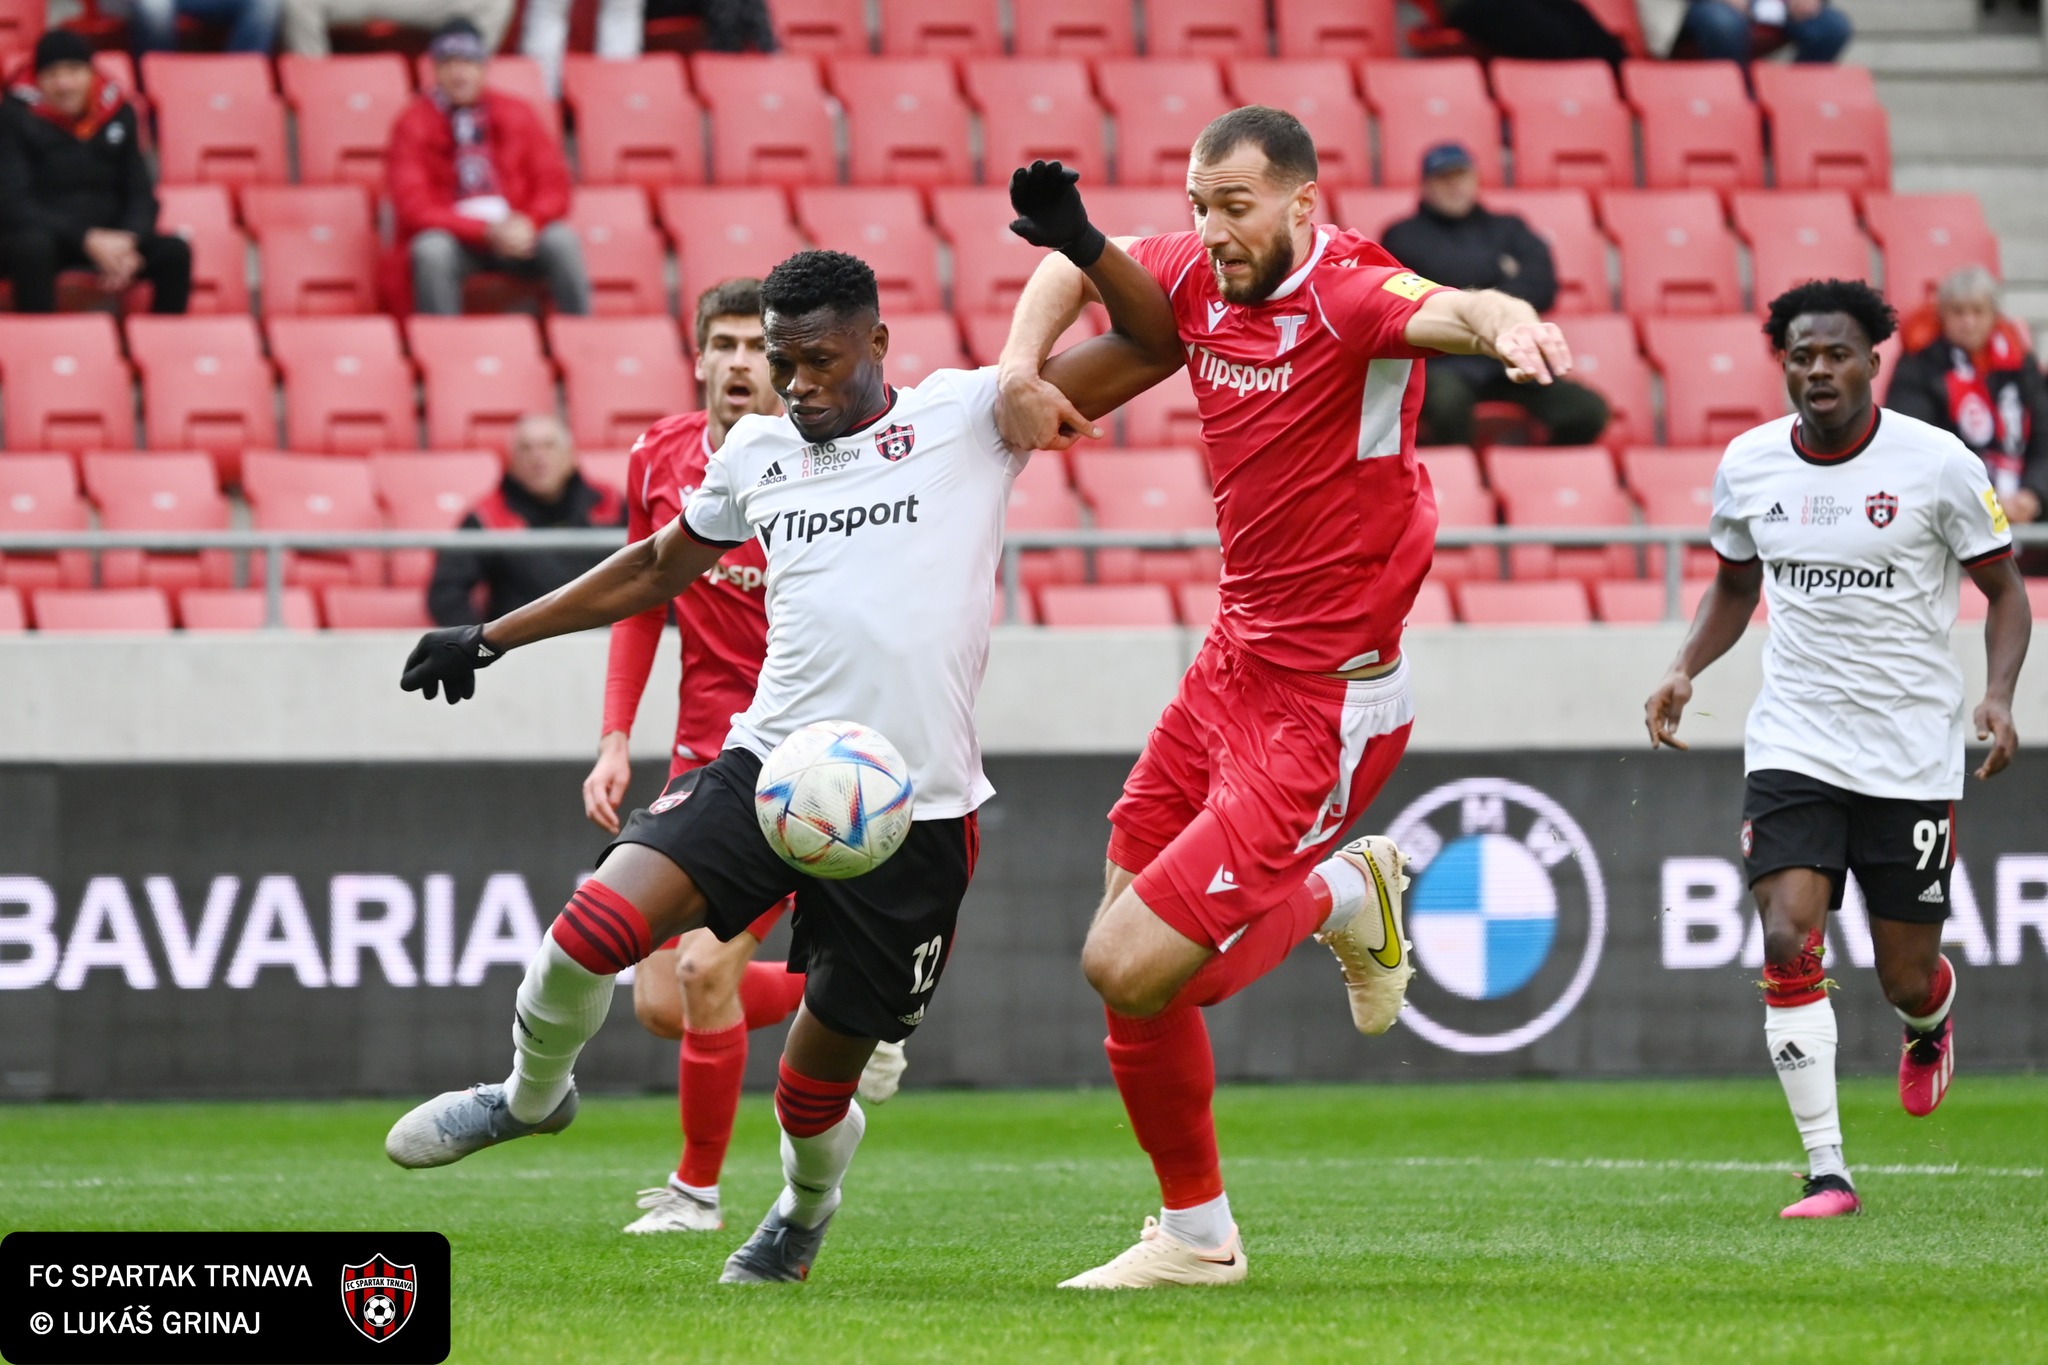 Ghana's Kelvin Ofori scores for FC Spartak Trnava against AS Trenčín